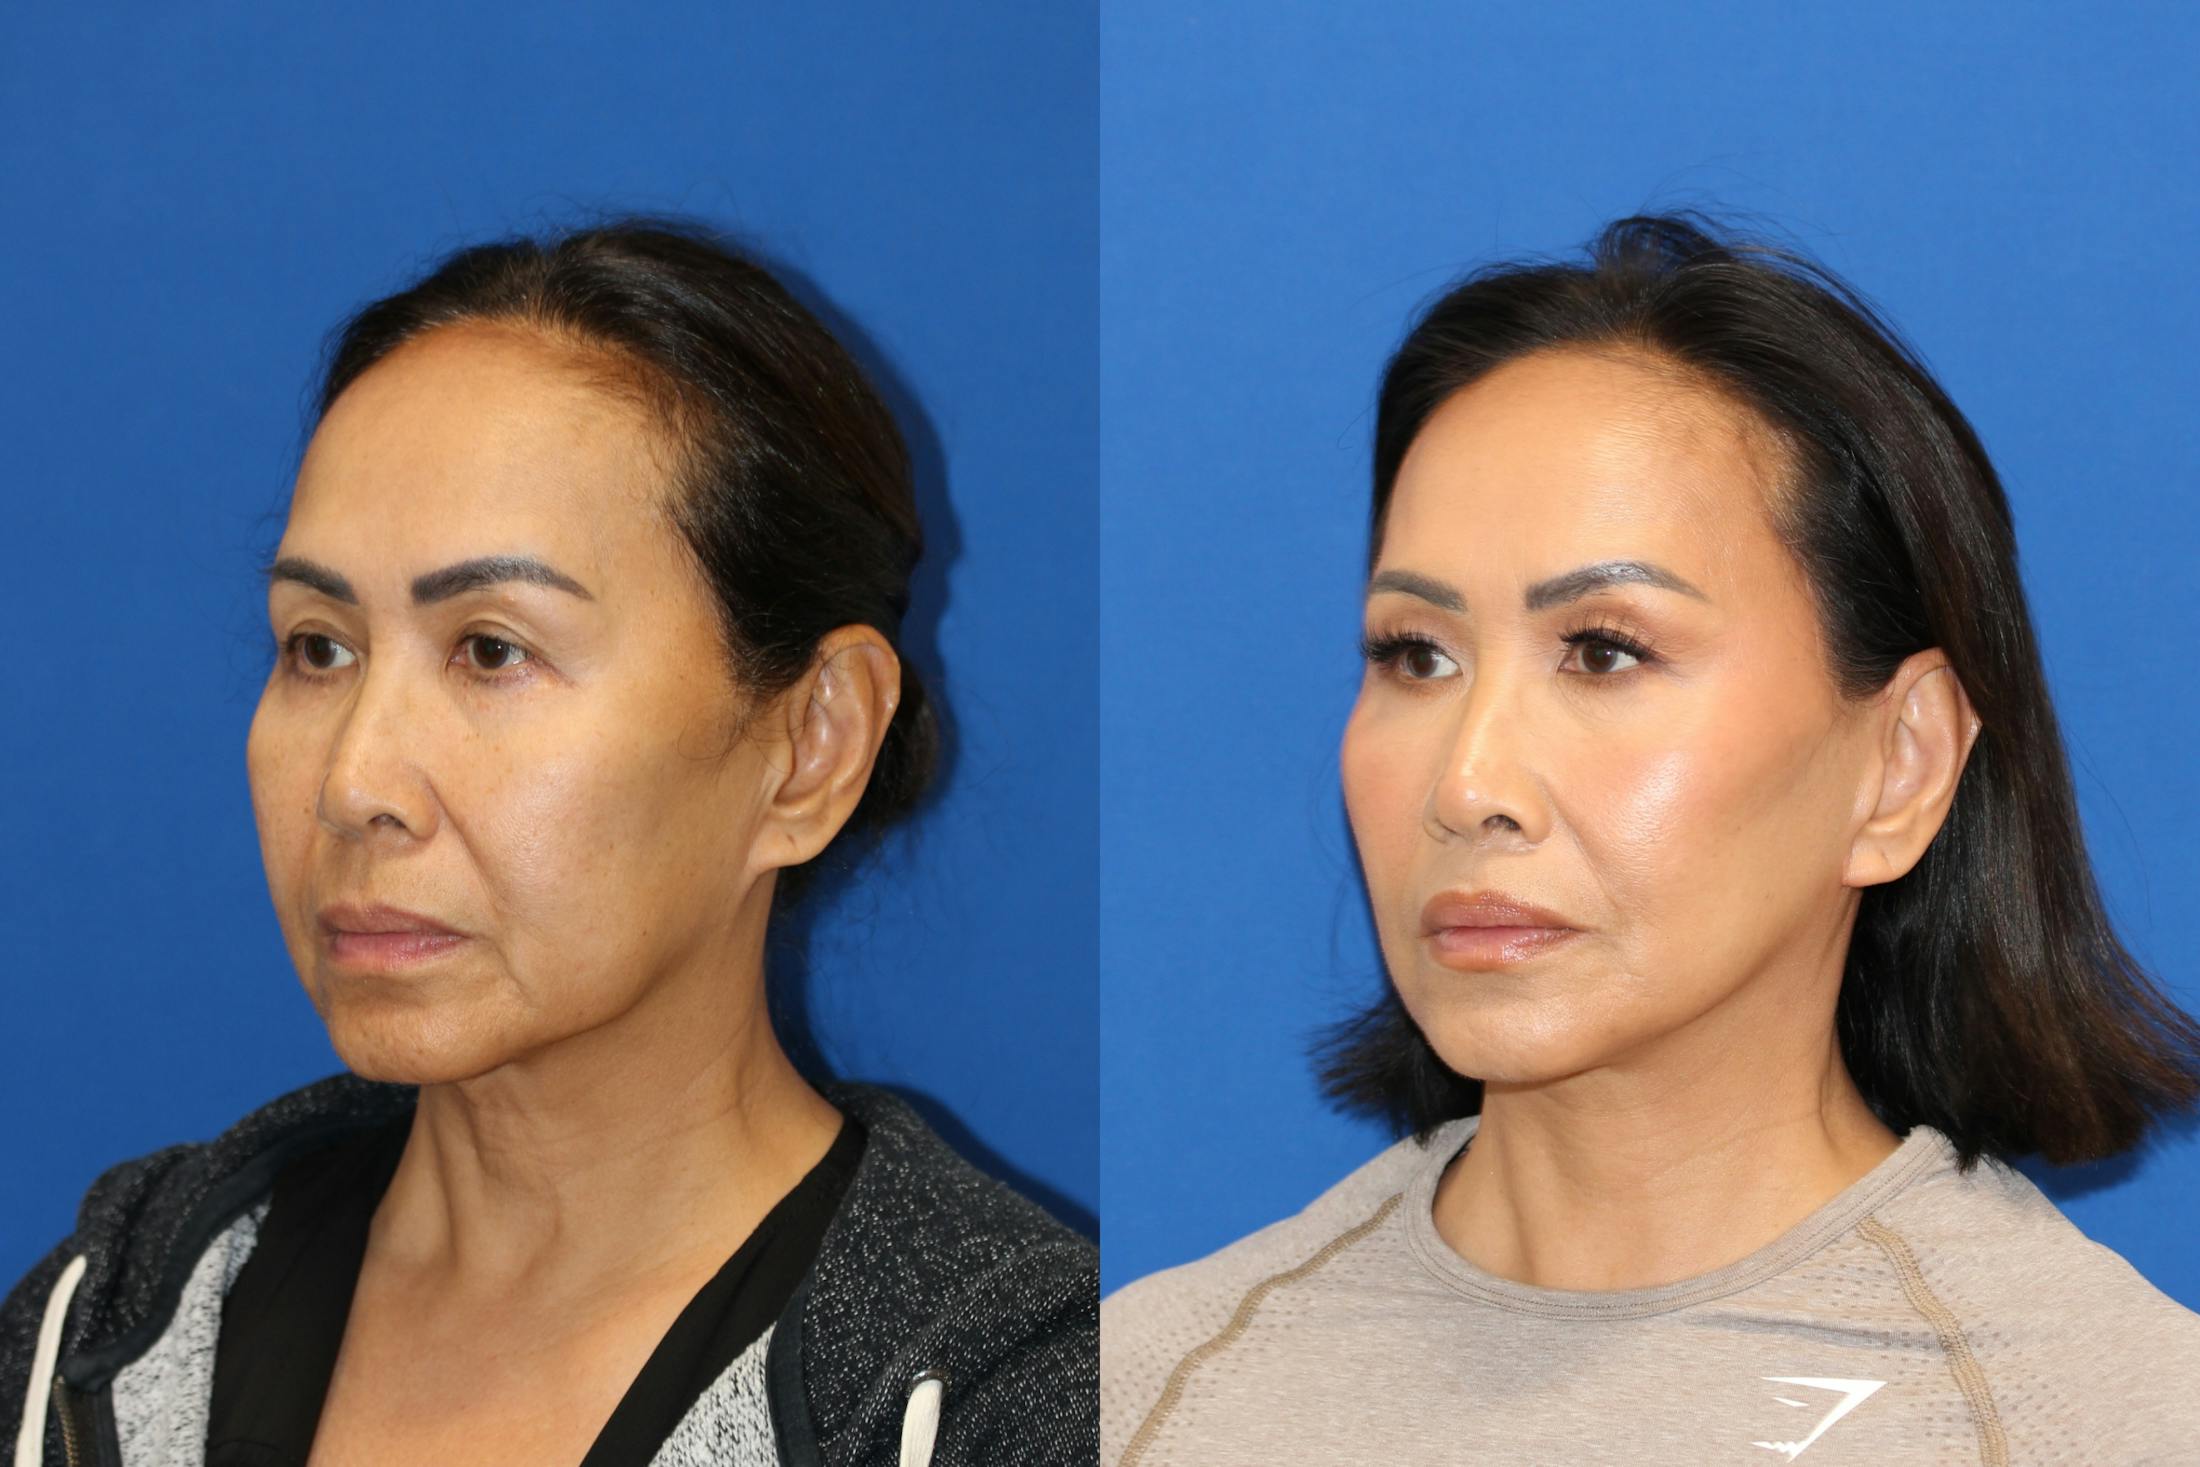 Vertical Restore® / Facial Rejuvenation Before & After Gallery - Patient 153265713 - Image 4